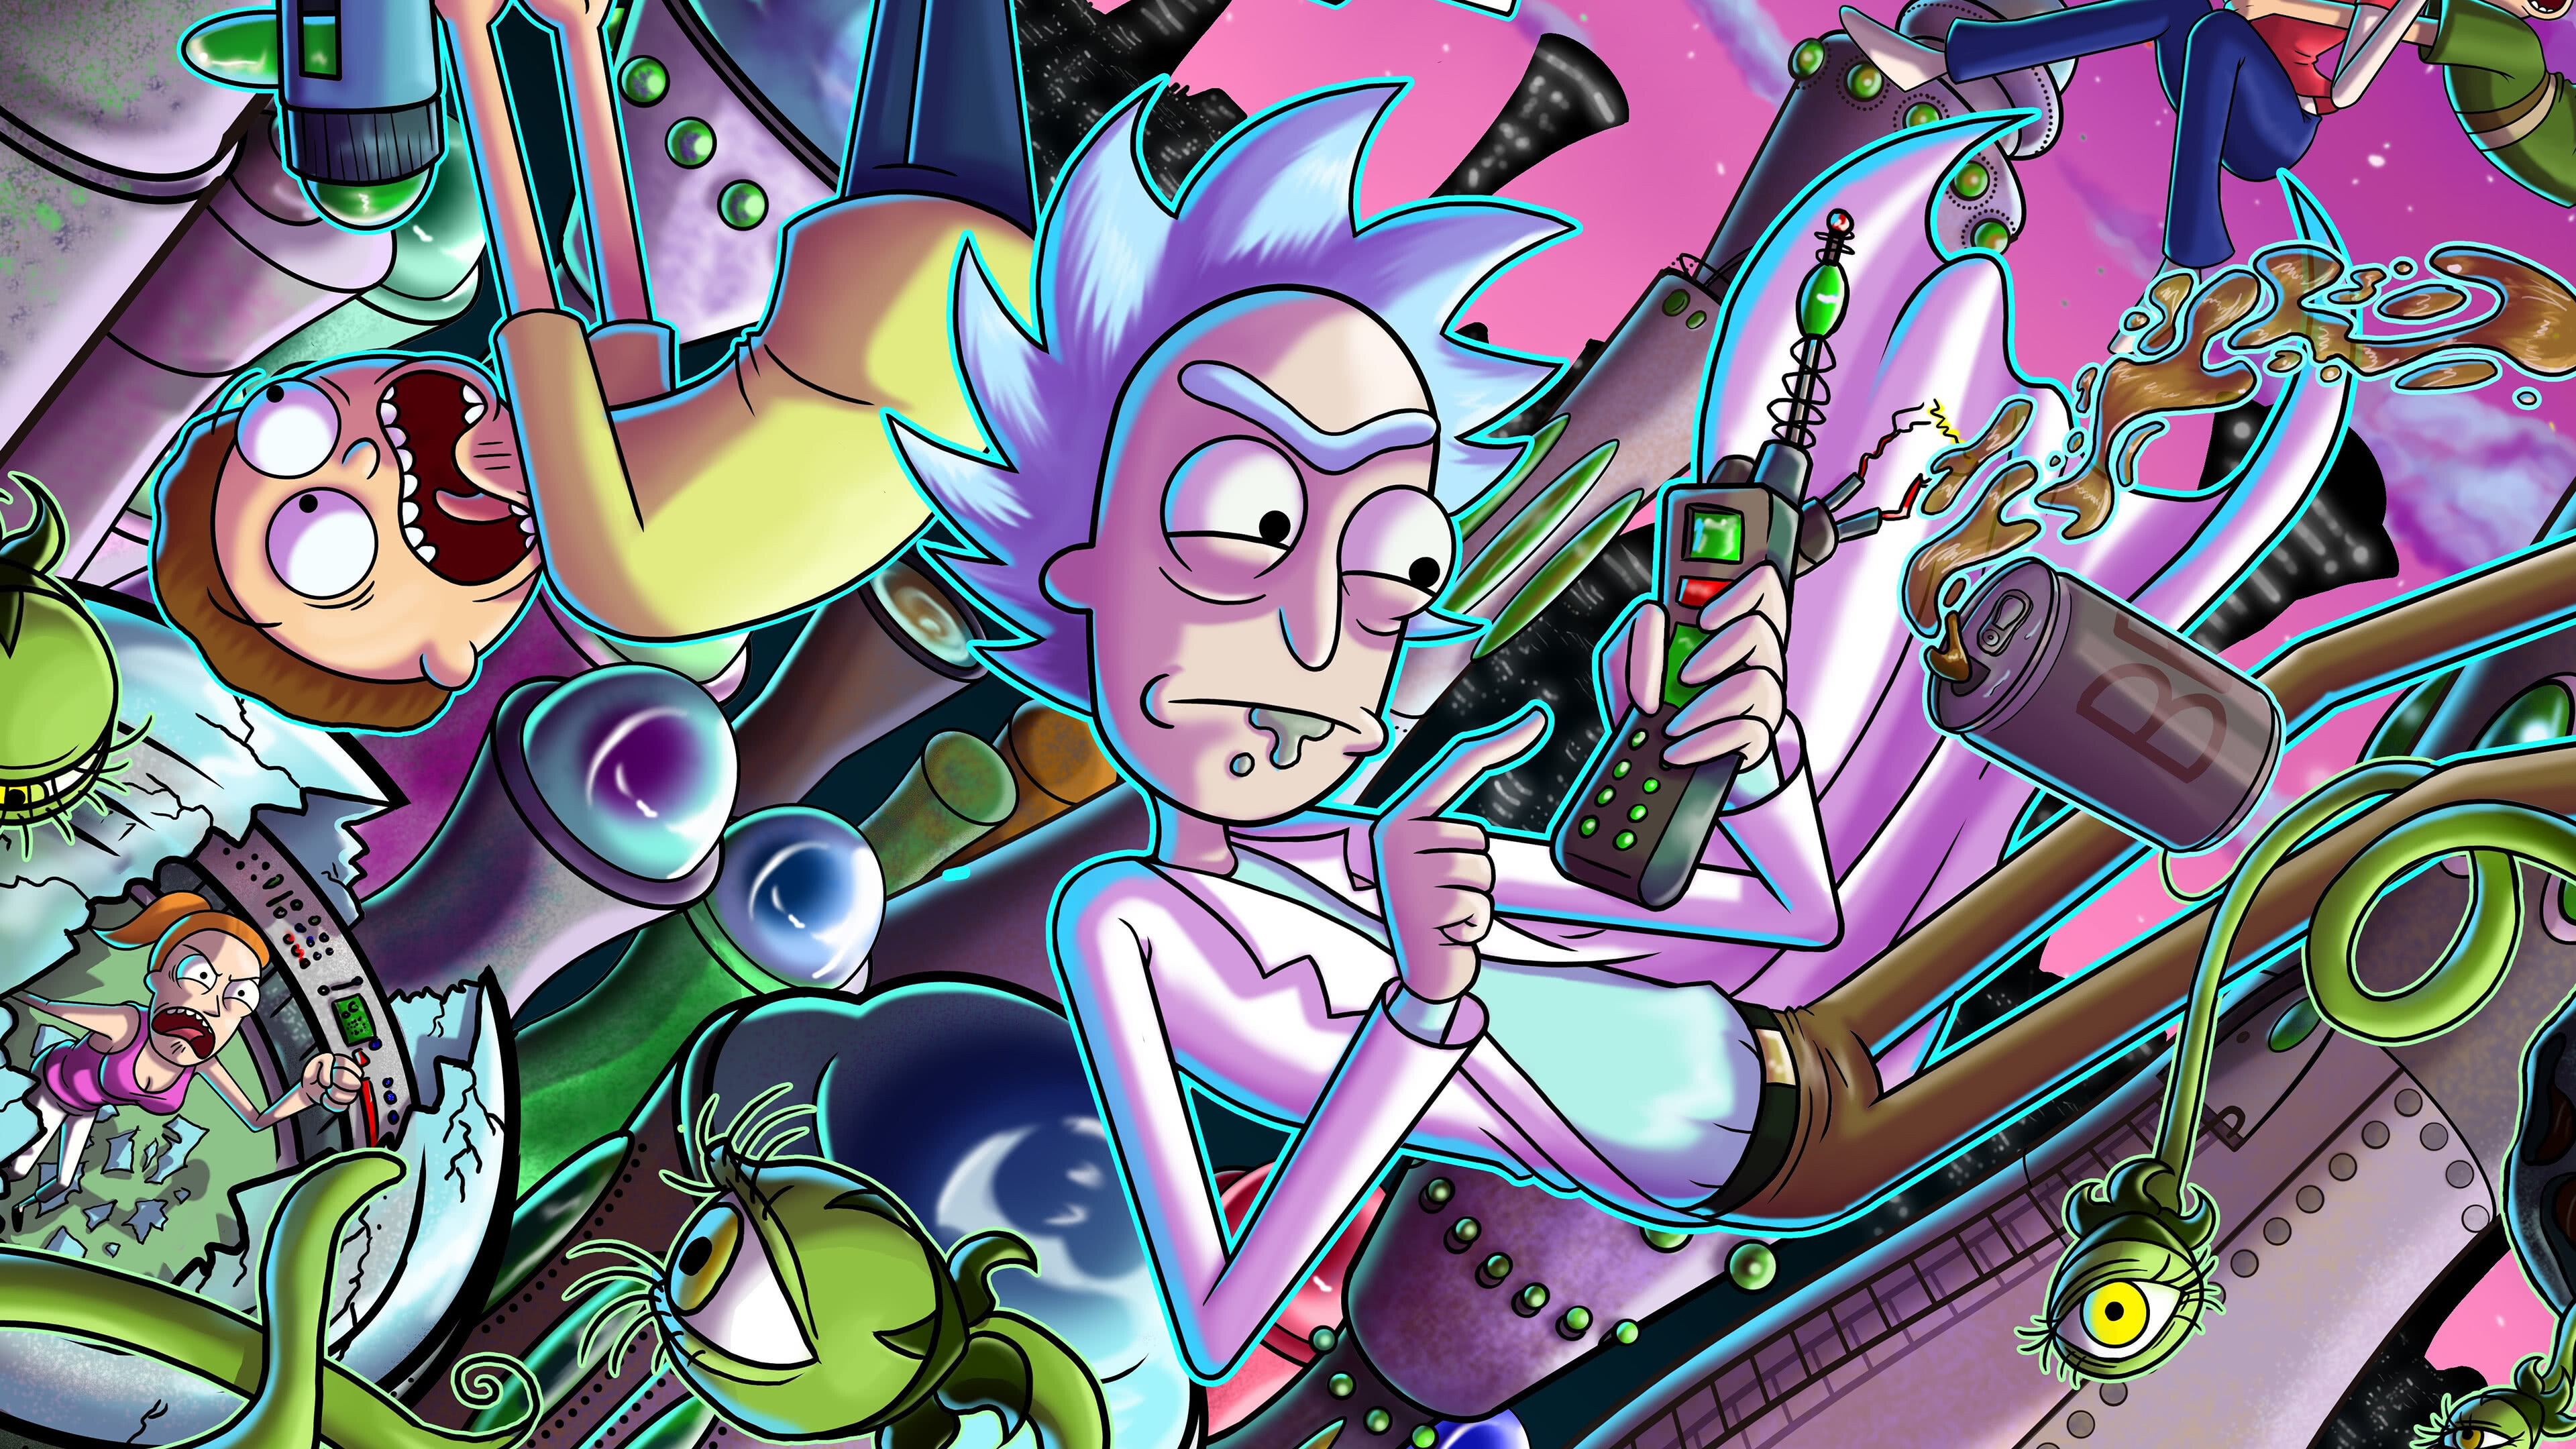 Rick and Morty: Virtual Rick-ality, Cartoon Network's nighttime programming block Adult Swim. 3840x2160 4K Wallpaper.